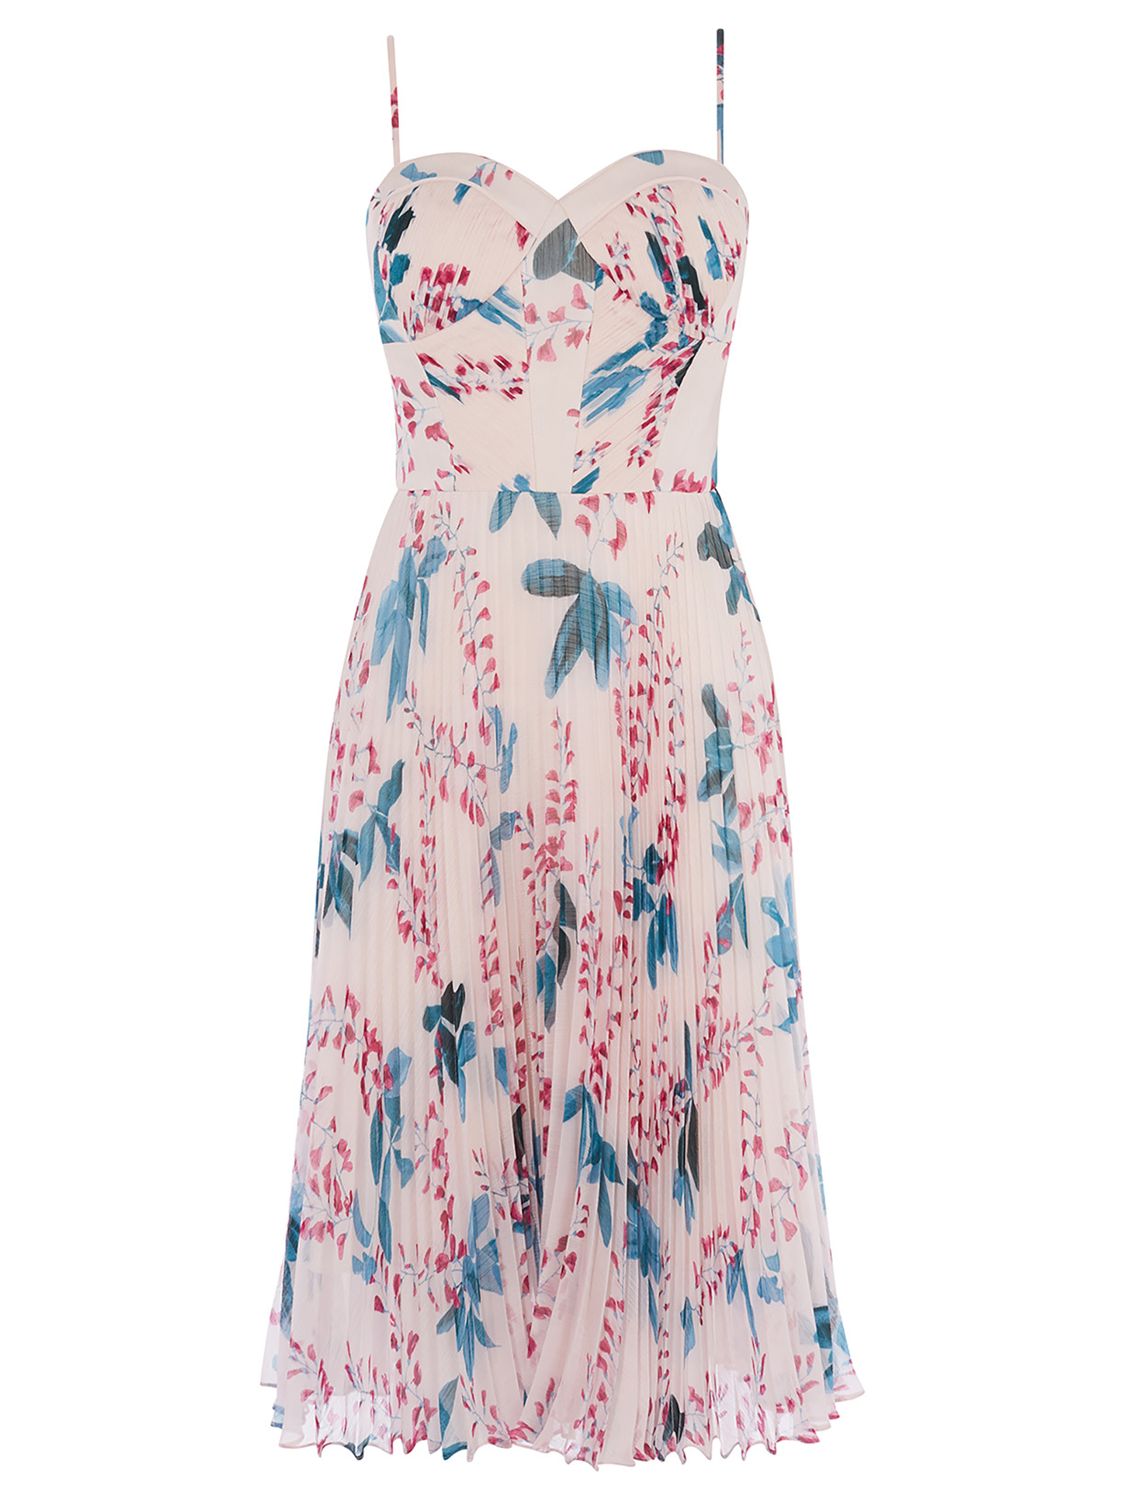 Karen Millen Floral Print Pleated Dress, Pink/Multi